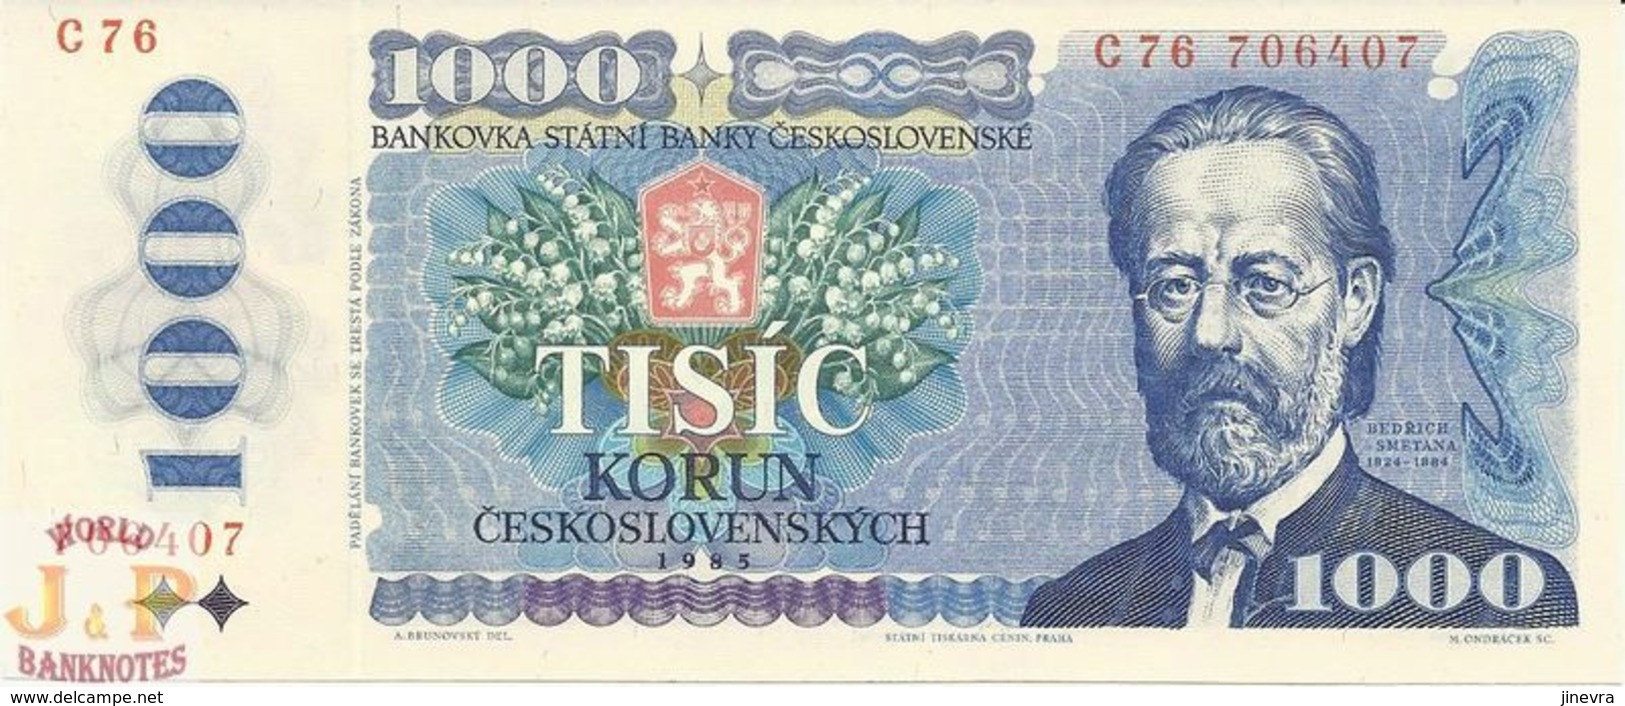 CZECHOSLOVAKIA 1000 KORUN 1985 PICK 98a UNC - Czechoslovakia